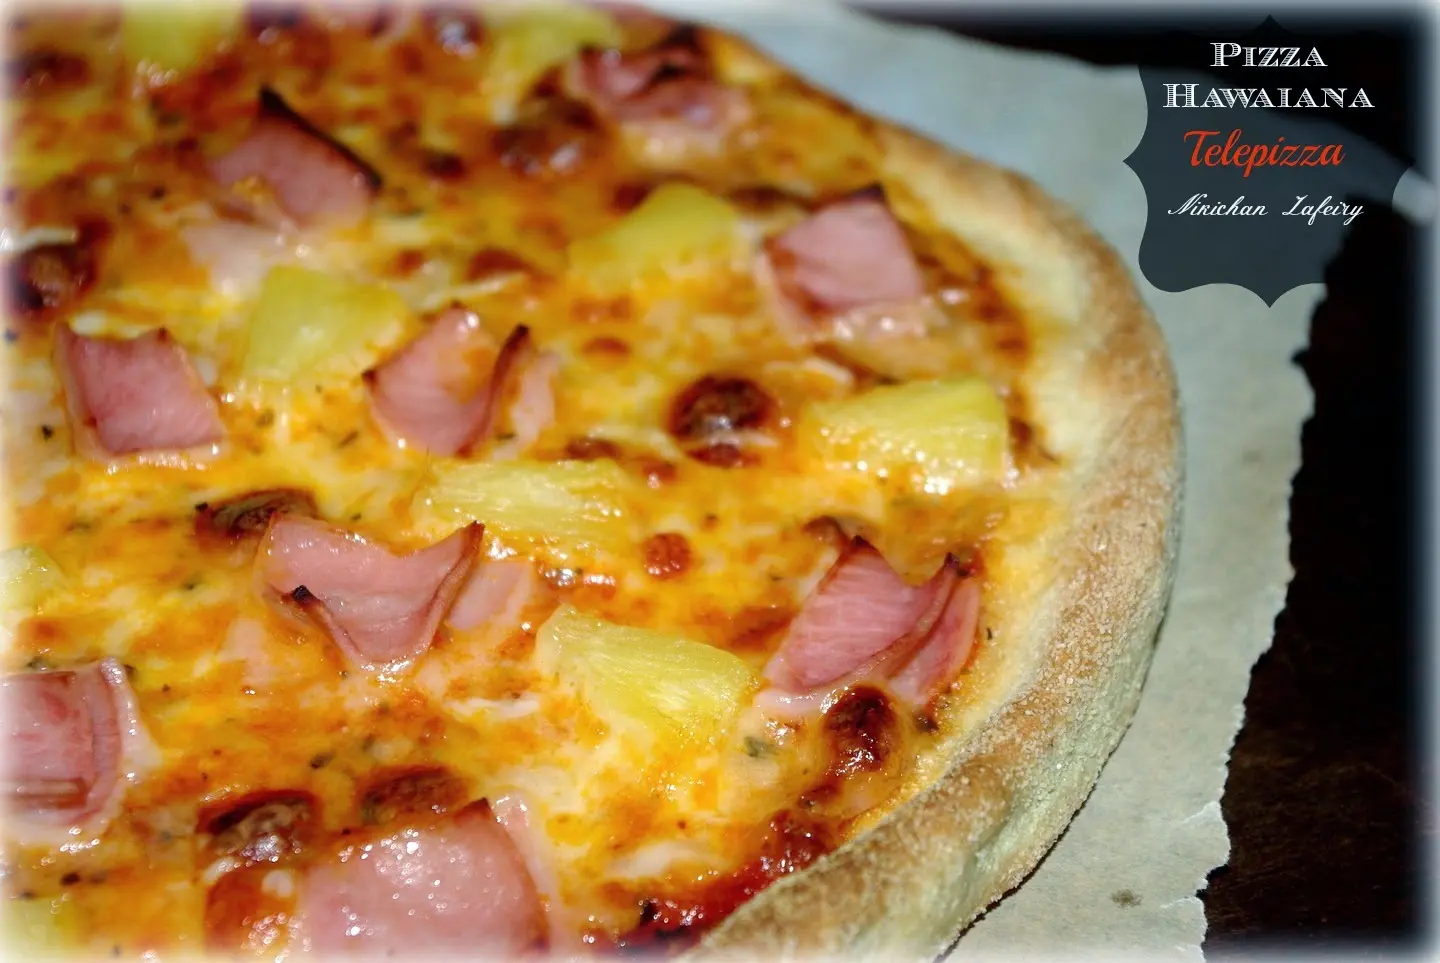 ingredientes pizza hawaiana telepizza - Cuánto cuesta una pizza hawaiana